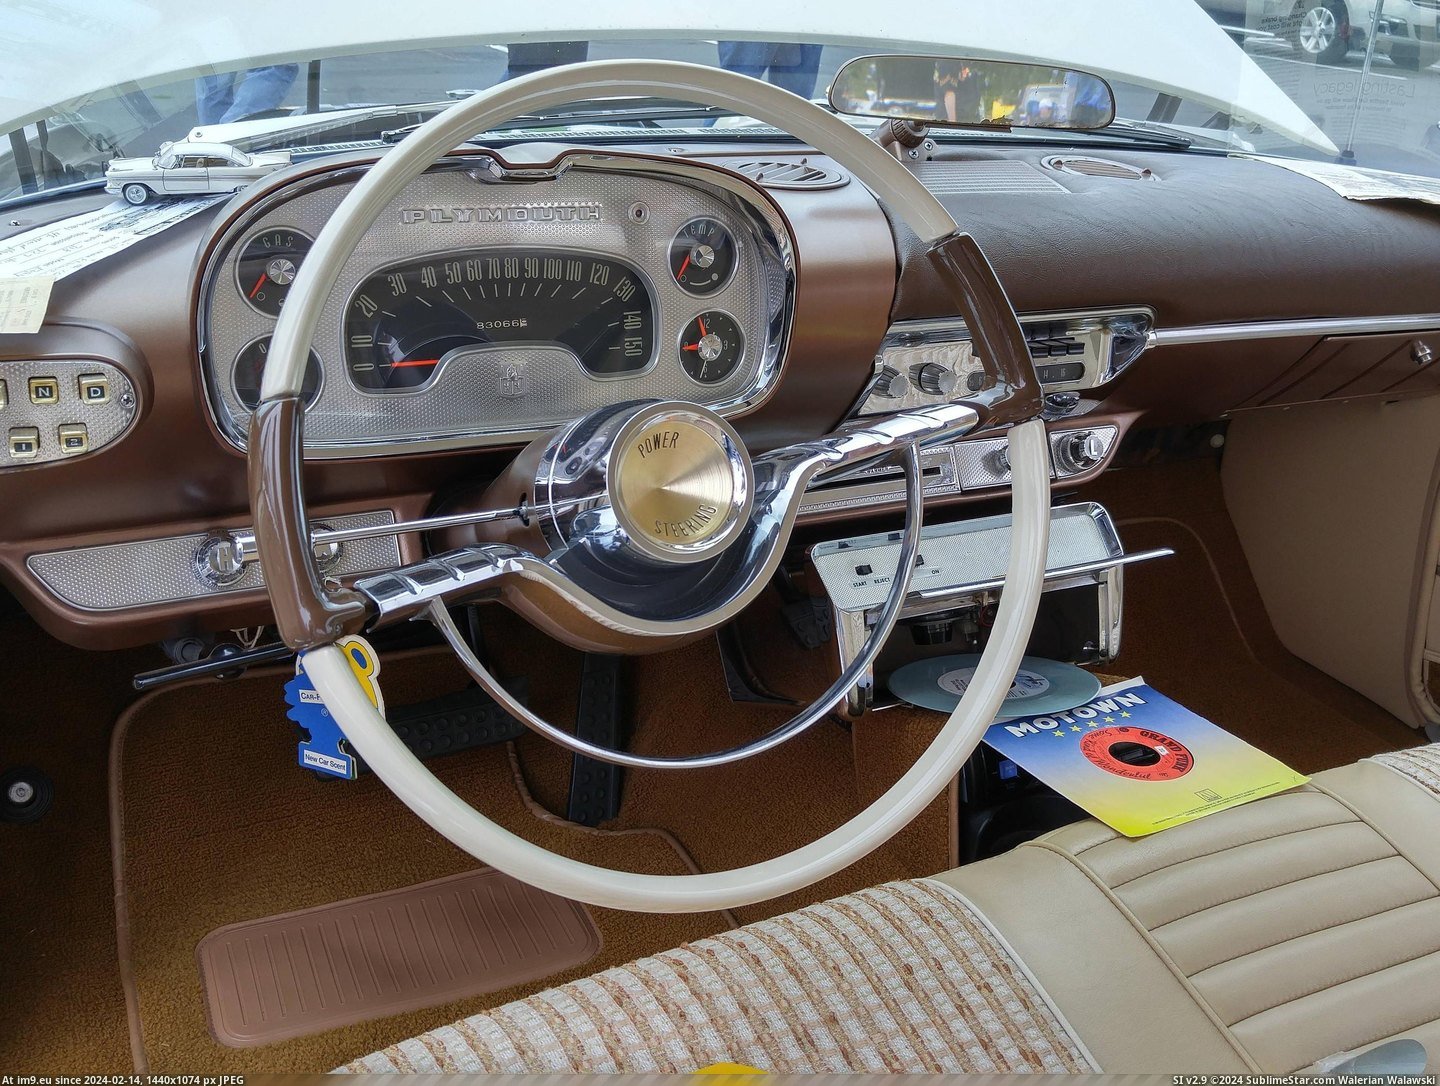 #Car #Player #Stereo #Record [Mildlyinteresting] This car stereo has a record player Pic. (Bild von album My r/MILDLYINTERESTING favs))